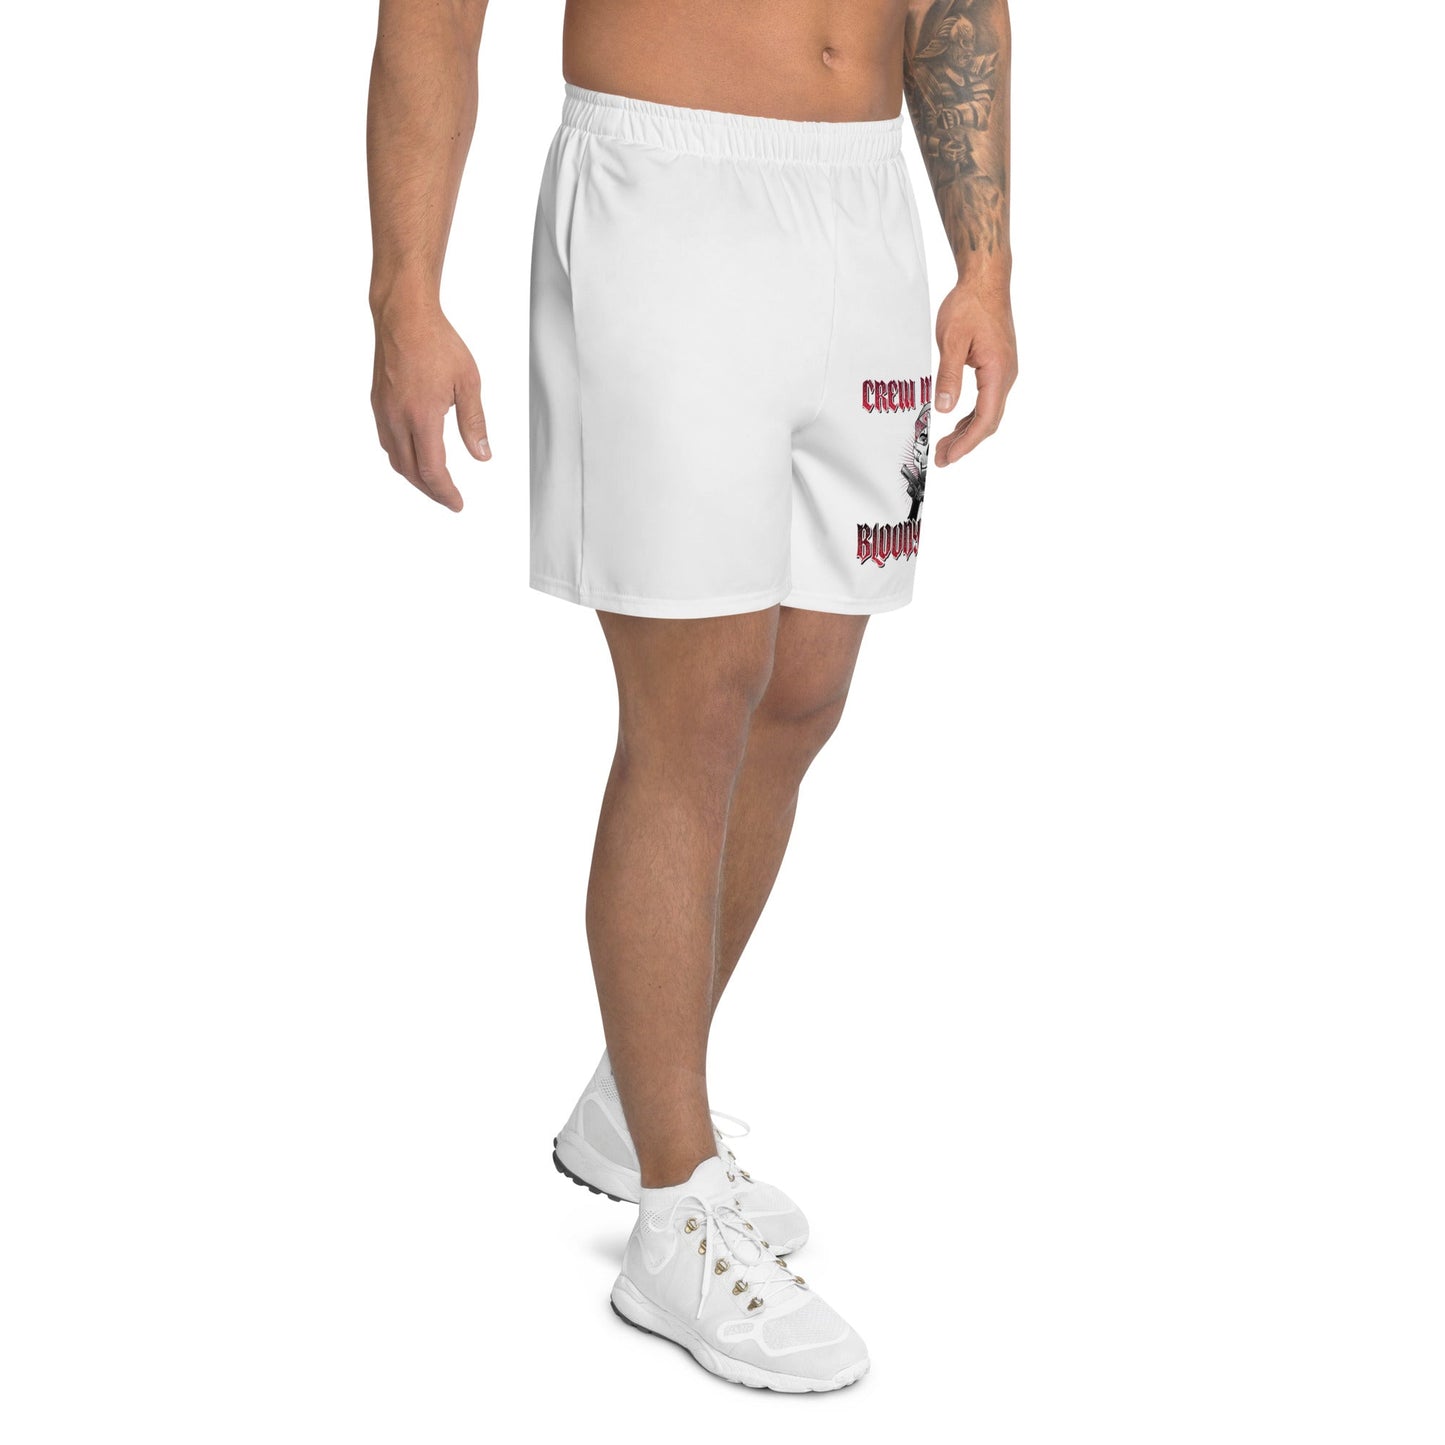 CREW MEMBER - Recycelte Sport-Shorts für Herren - BLOODY-STREETS.DE Streetwear Herren und Damen Hoodies, T-Shirts, Pullis